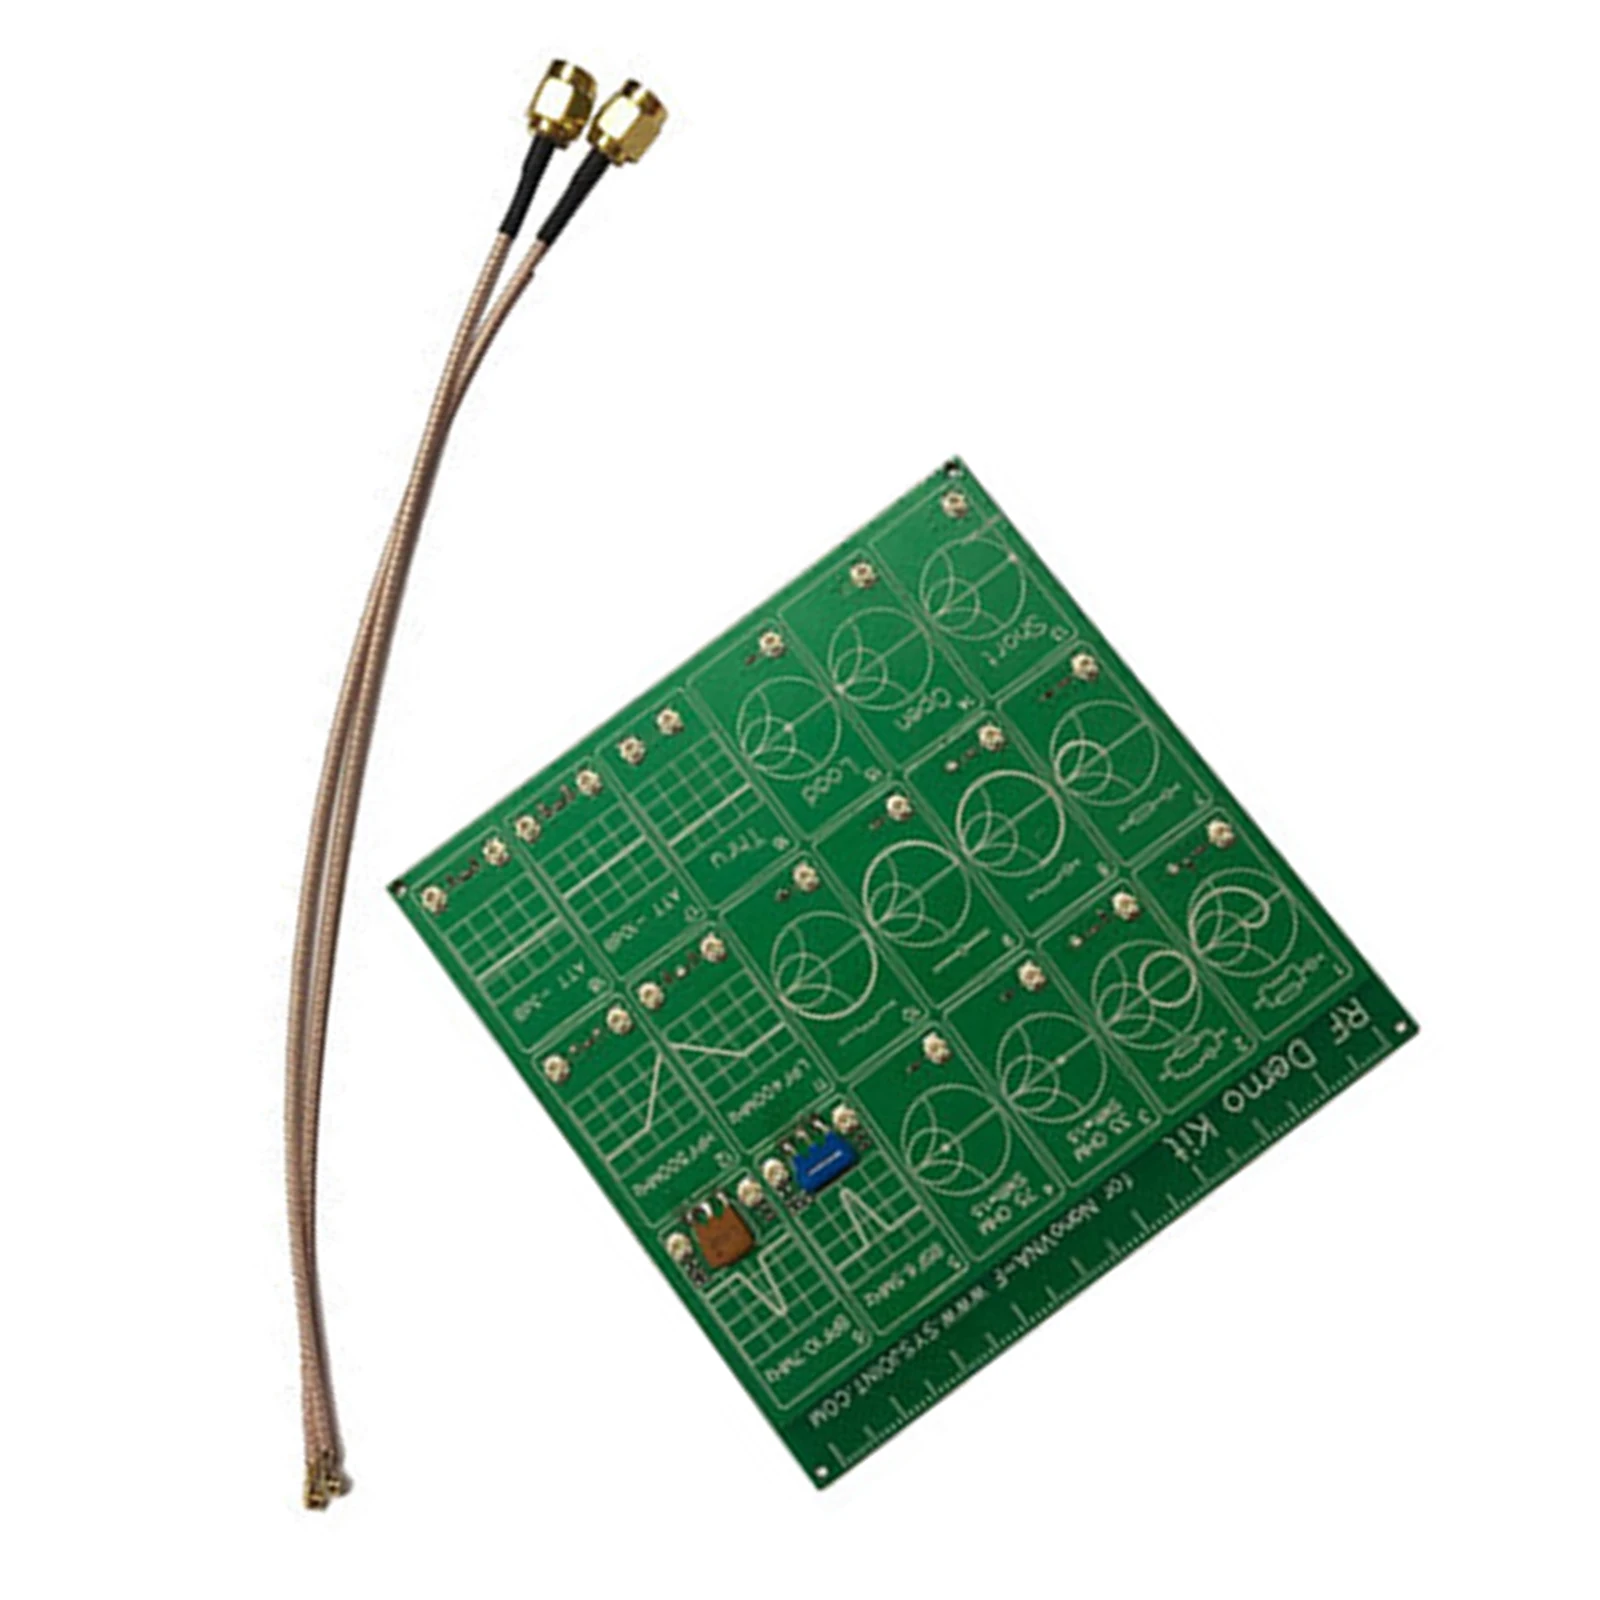 RF Test Board NanoVNA-F RF Test Module Vector Network Analyzer Board Filter Attenuator Module for Antenna Analyzer Measuring